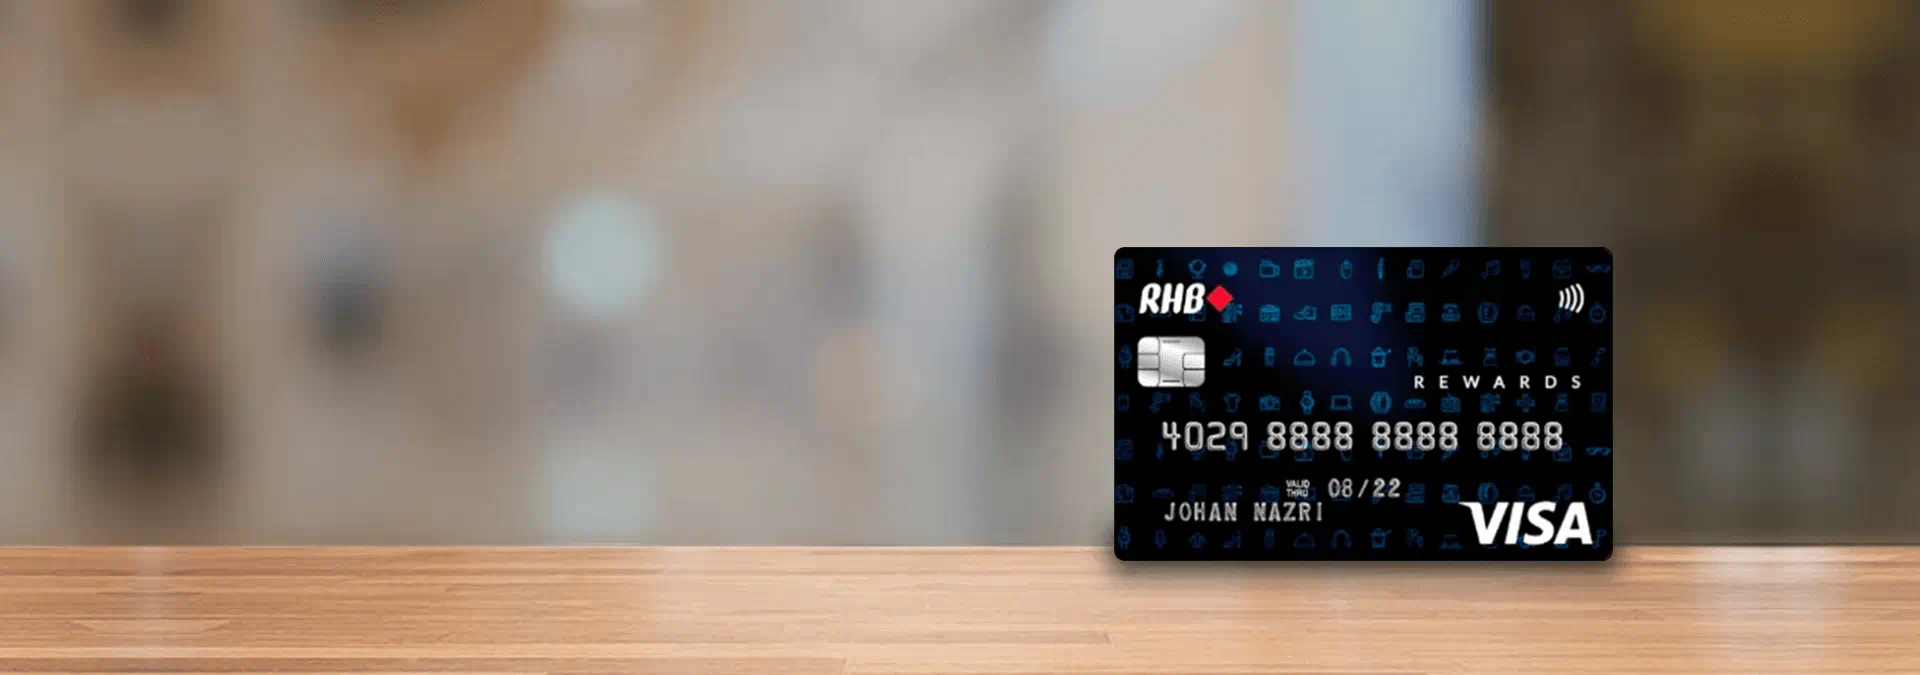 rhb-rewards-motion-code-credit-card-banner